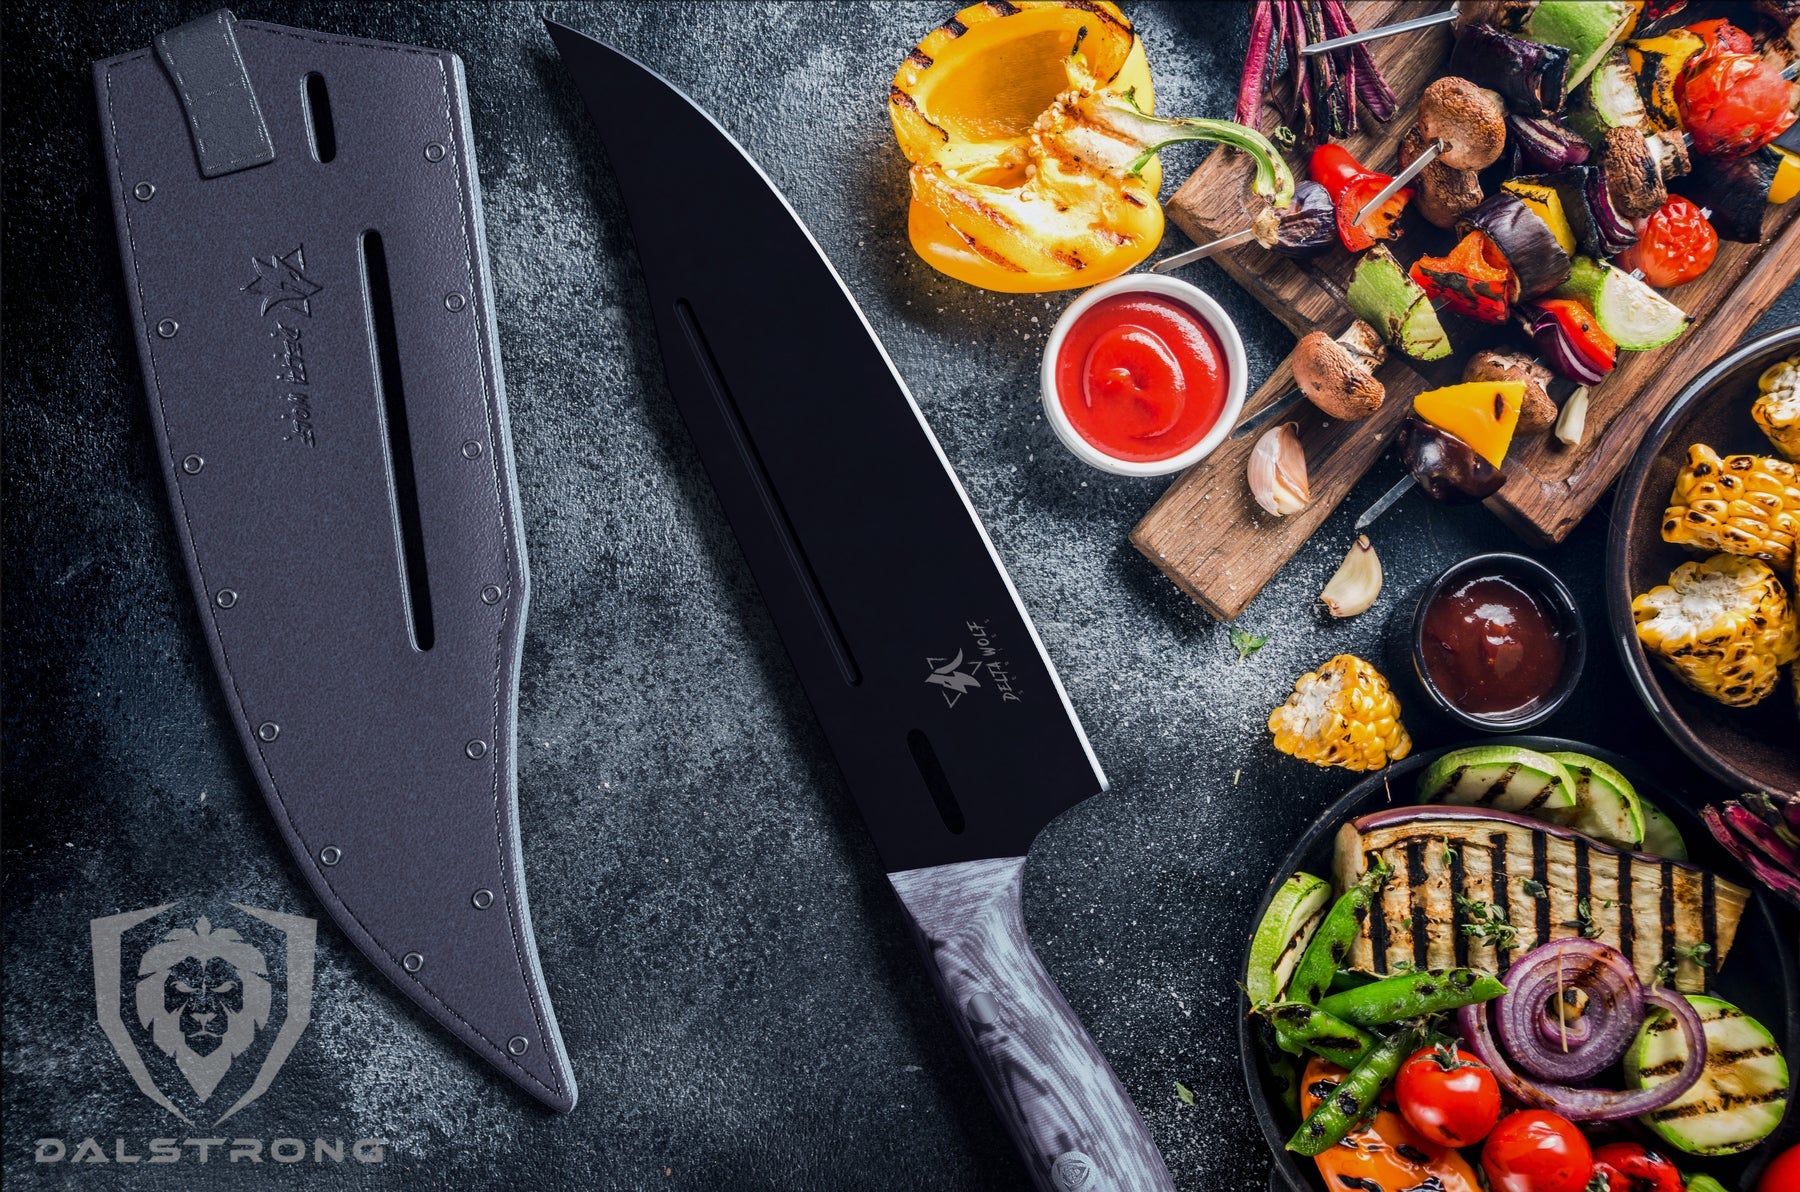 Steak knives Set of 4, Super-Sharp 5 Inch Damascus Steak Knife Set, Japanese  VG10 Core Steel 73 Layers - Non-Serrated Steak Knives with Case 